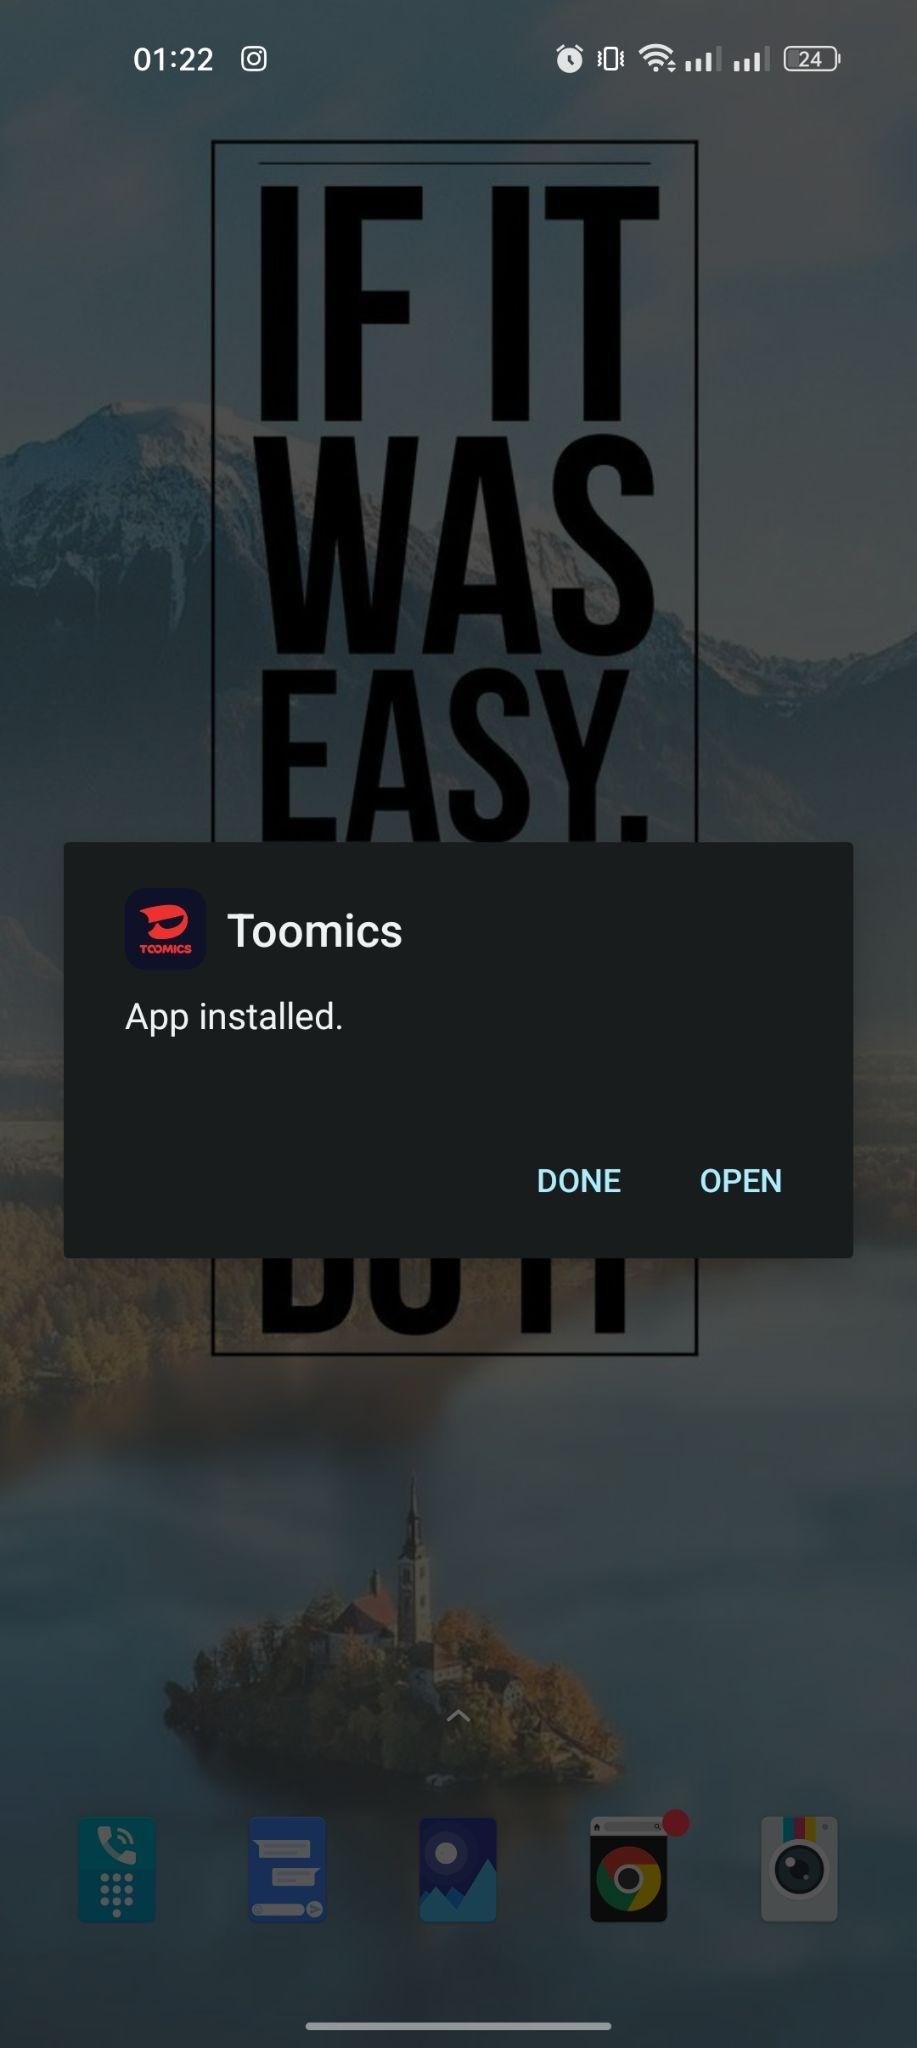 Toomics apk installed